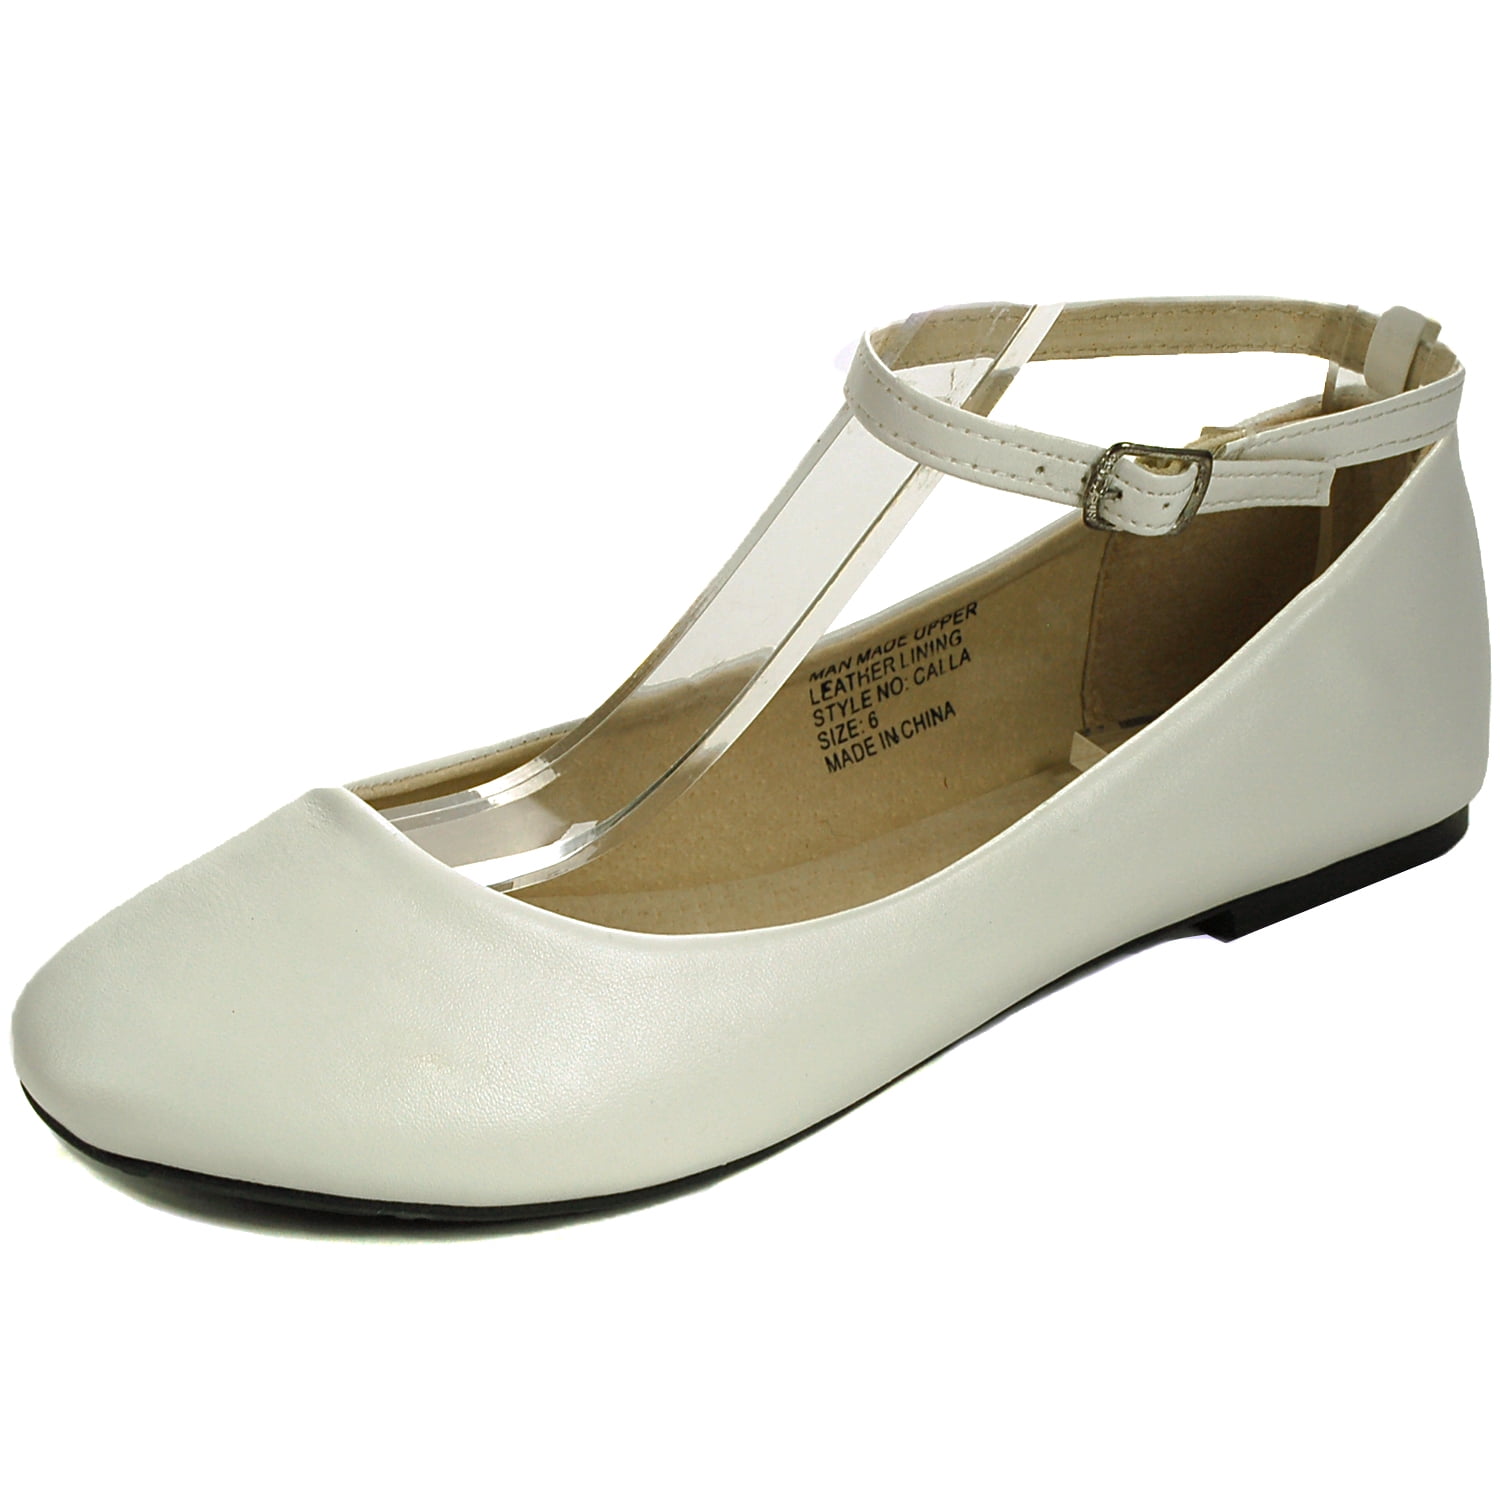 white ballet flat shoes